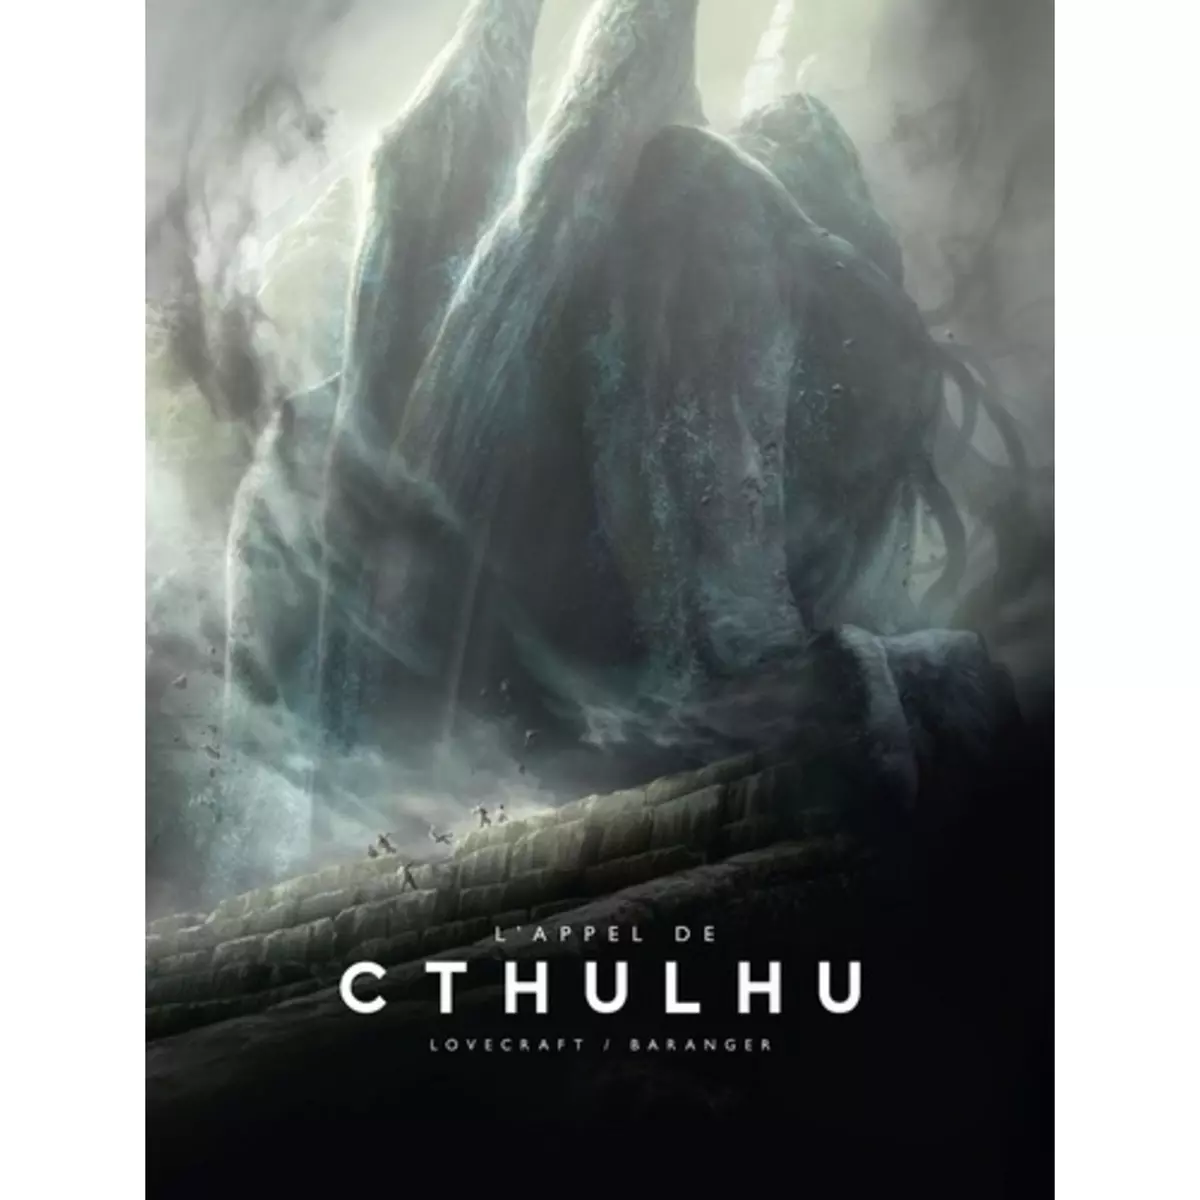  L'APPEL DE CTHULHU, Lovecraft Howard Phillips